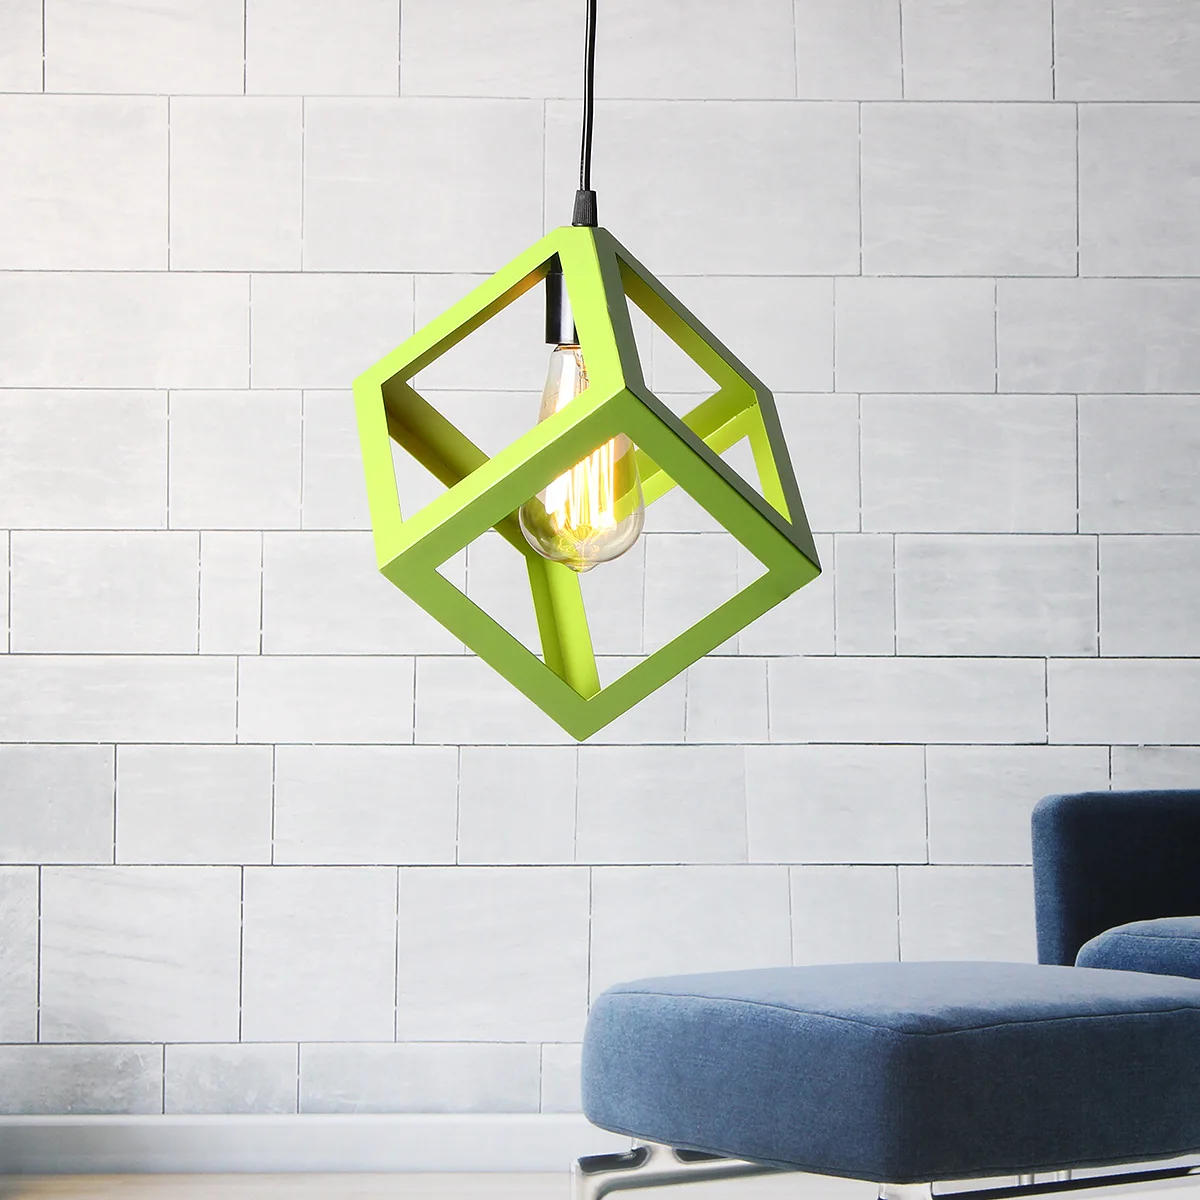 Best-selling Loft Design Indoor Hanging Light Geometric ceiling lamp led for sale